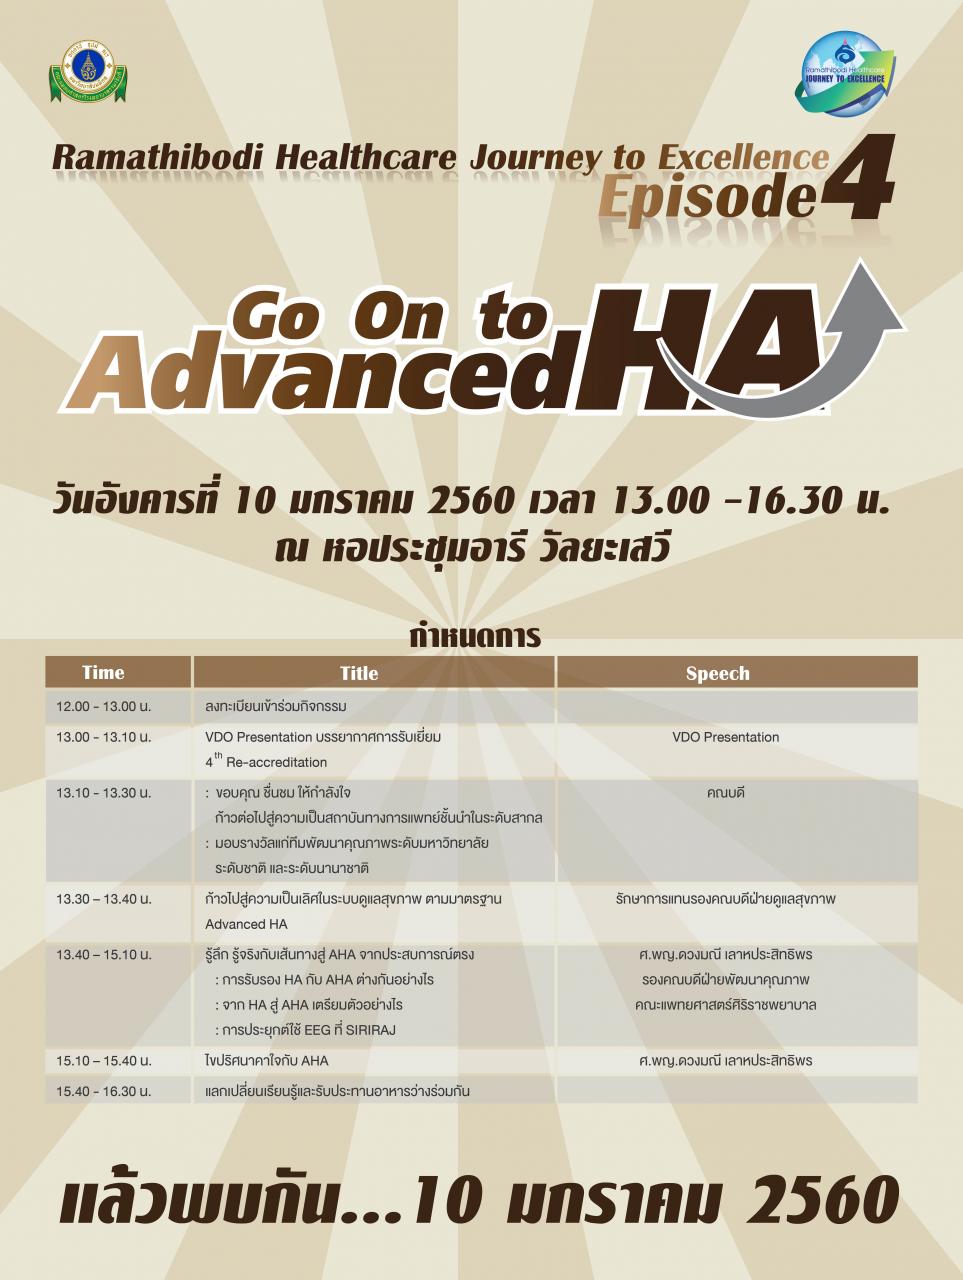 Ramathibodi Healthcare Journey to Excellence : Episode4 "Go on to Advanced HA"